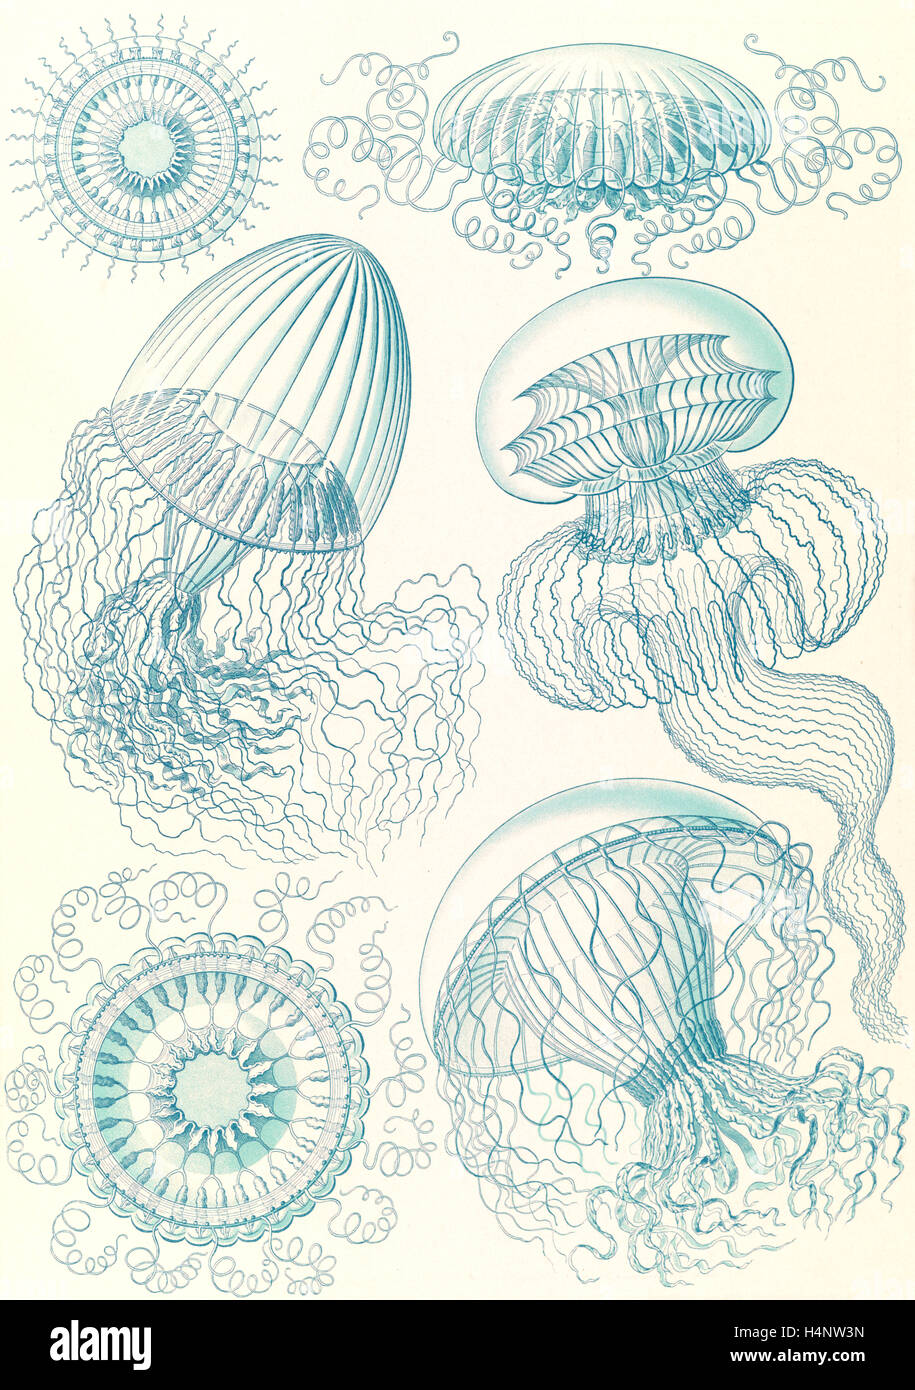 Illustration shows jellyfishes. Leptomedusae. - Faltenquallen, 1 print : color lithograph ; sheet 36 x 26 cm., 1904. Stock Photo